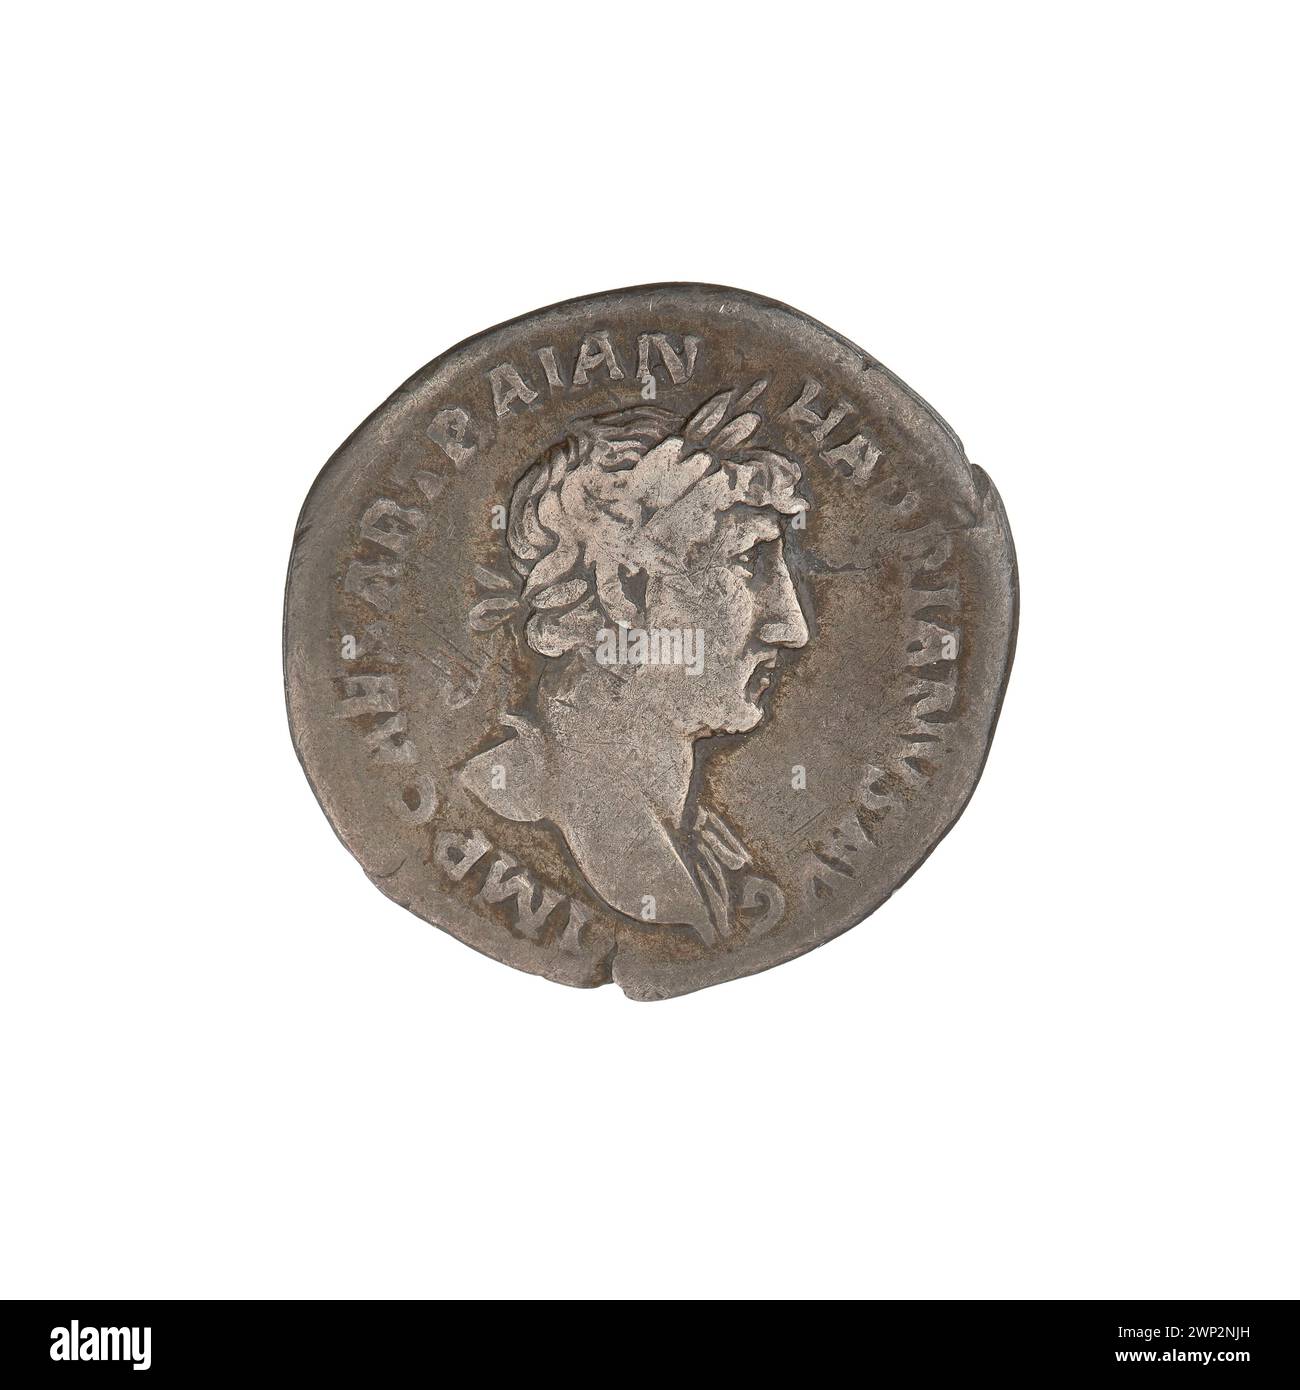 denarius; Hadrian (76-138; Roman emperor 117-138); 119-122 (118-00-00-118-00-00);Fortuna (personification), bust, abundance horns, reins, laurel wreaths Stock Photo